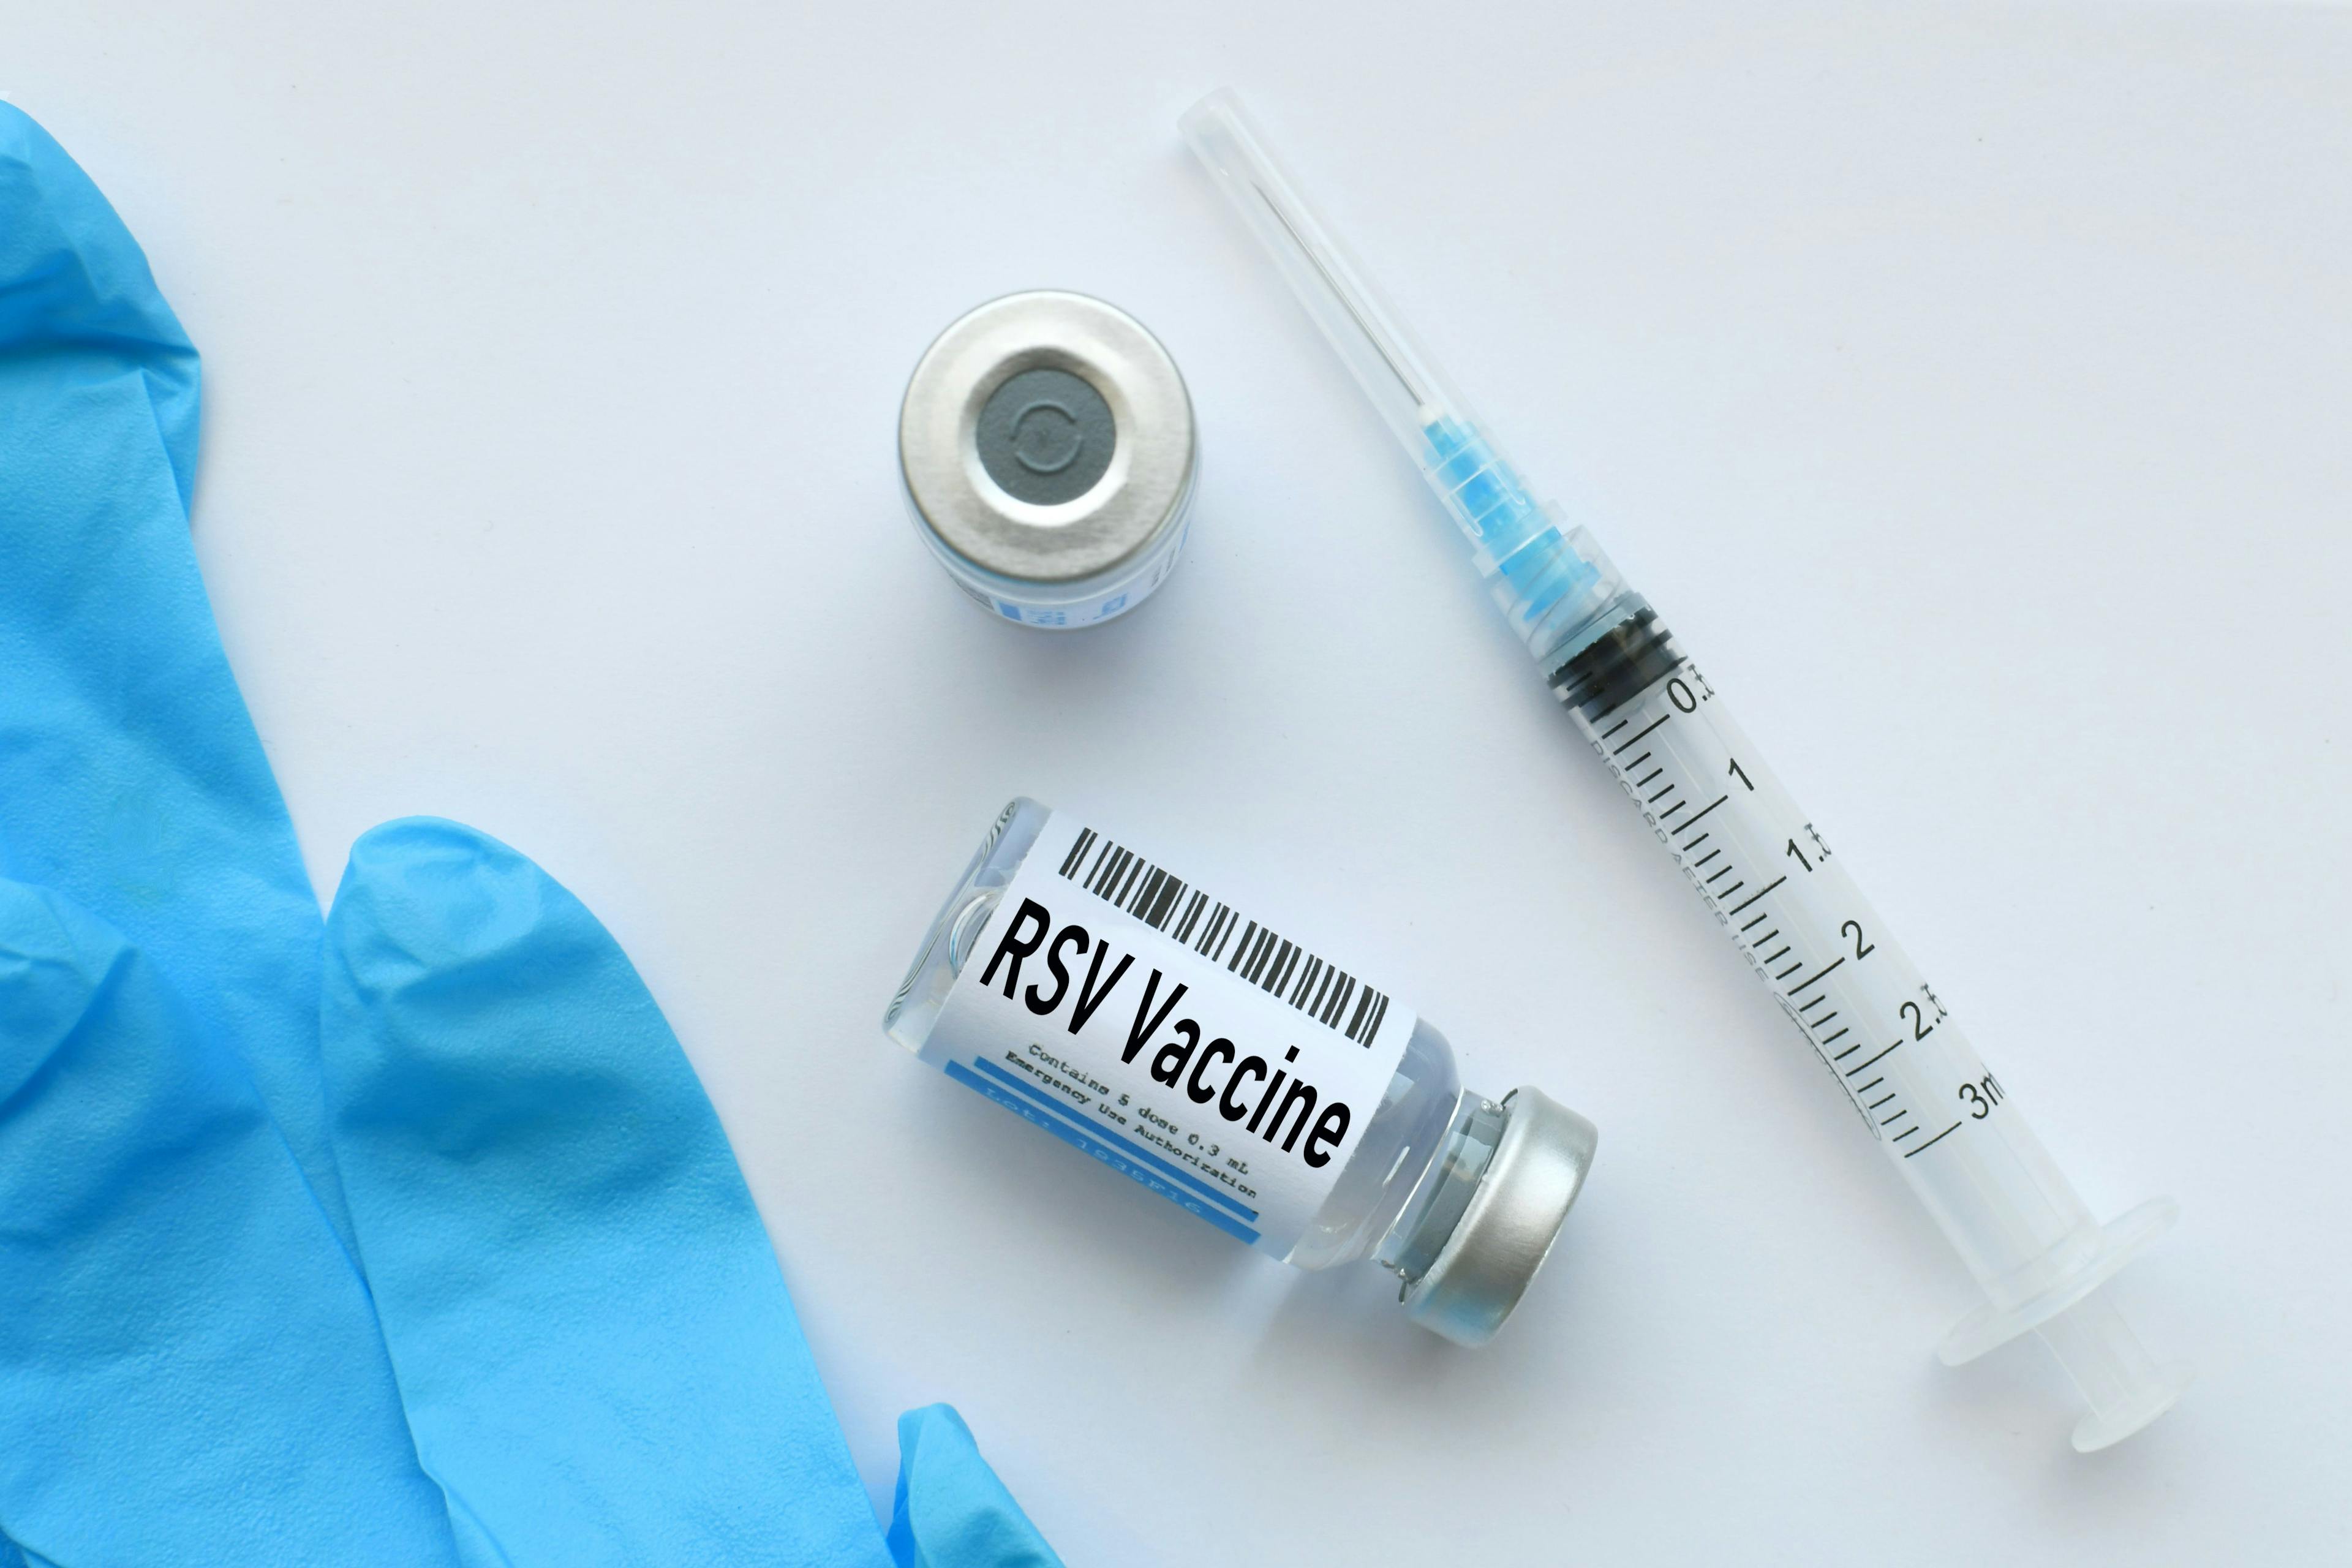 RSV vaccine vial with syringe -- Image credit: MargJohnsonVA | stock.adobe.com